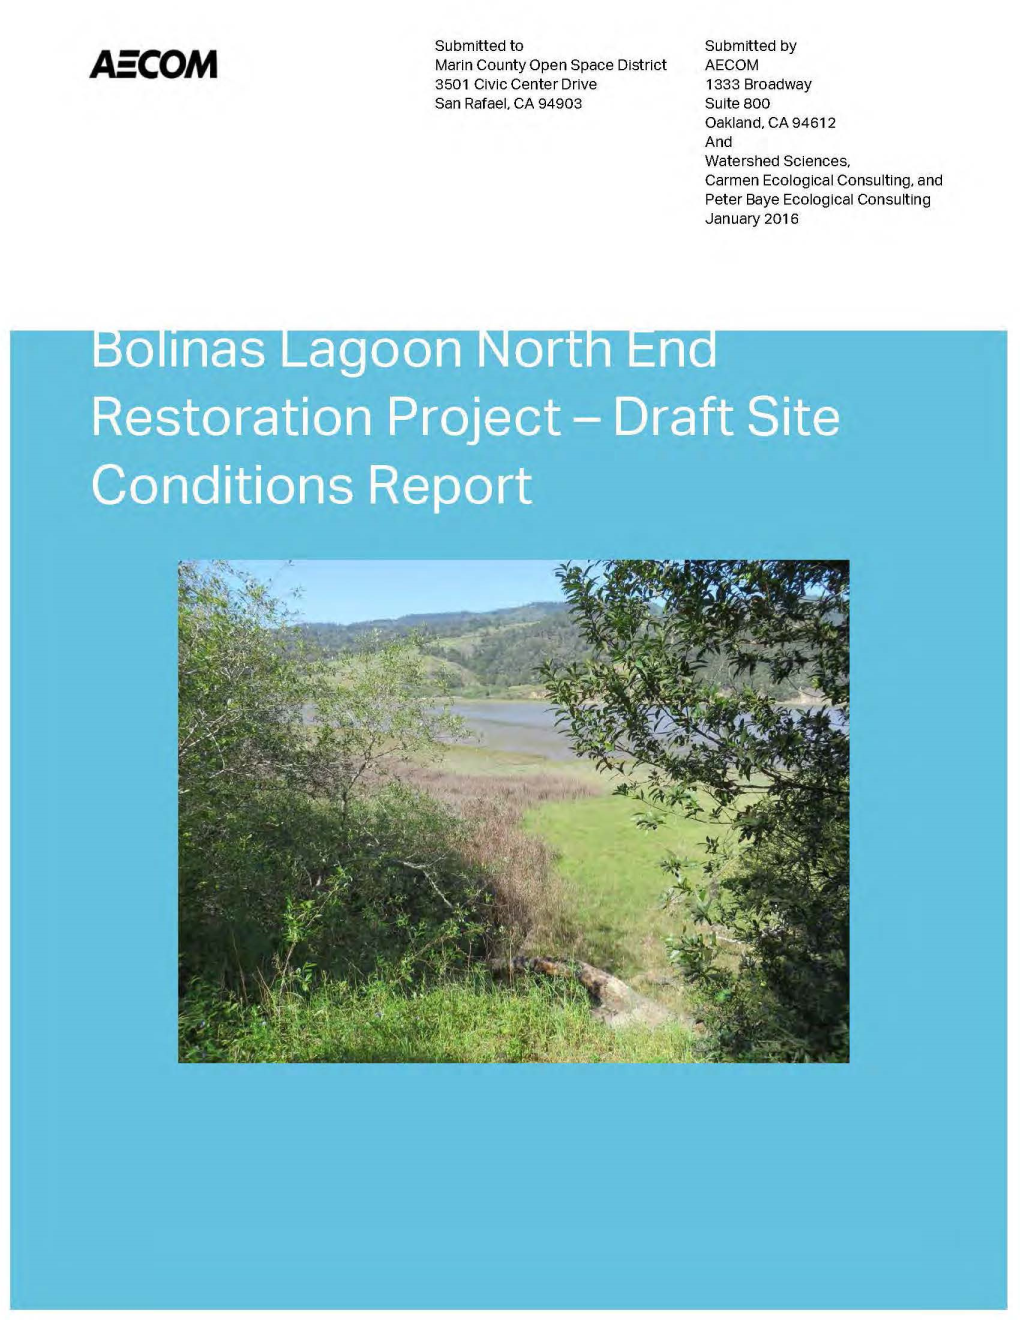 Bolinas Lagoon North End Restoration Project, Exising